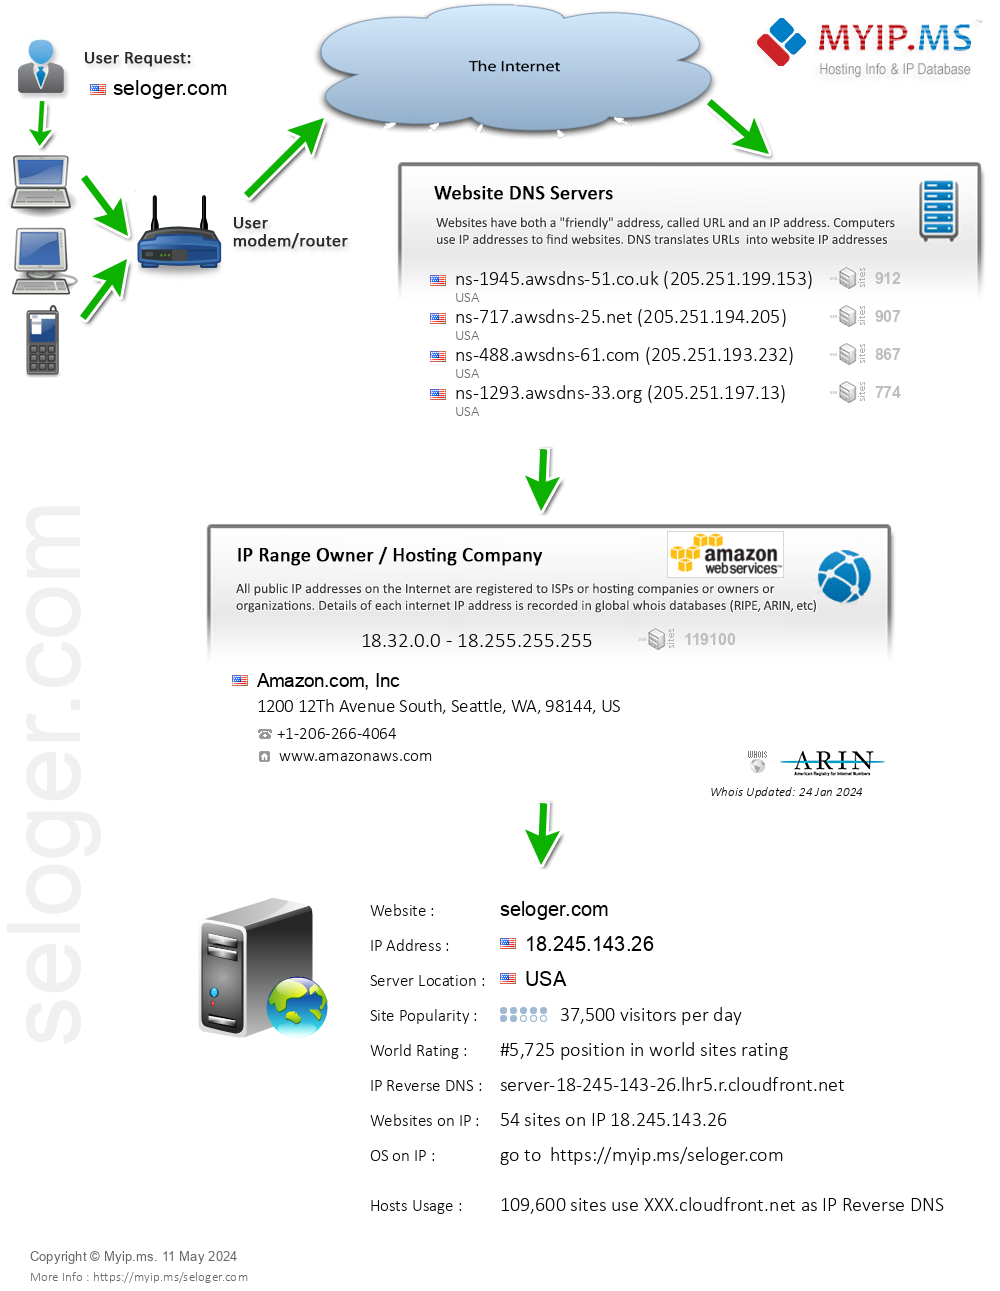 Seloger.com - Website Hosting Visual IP Diagram